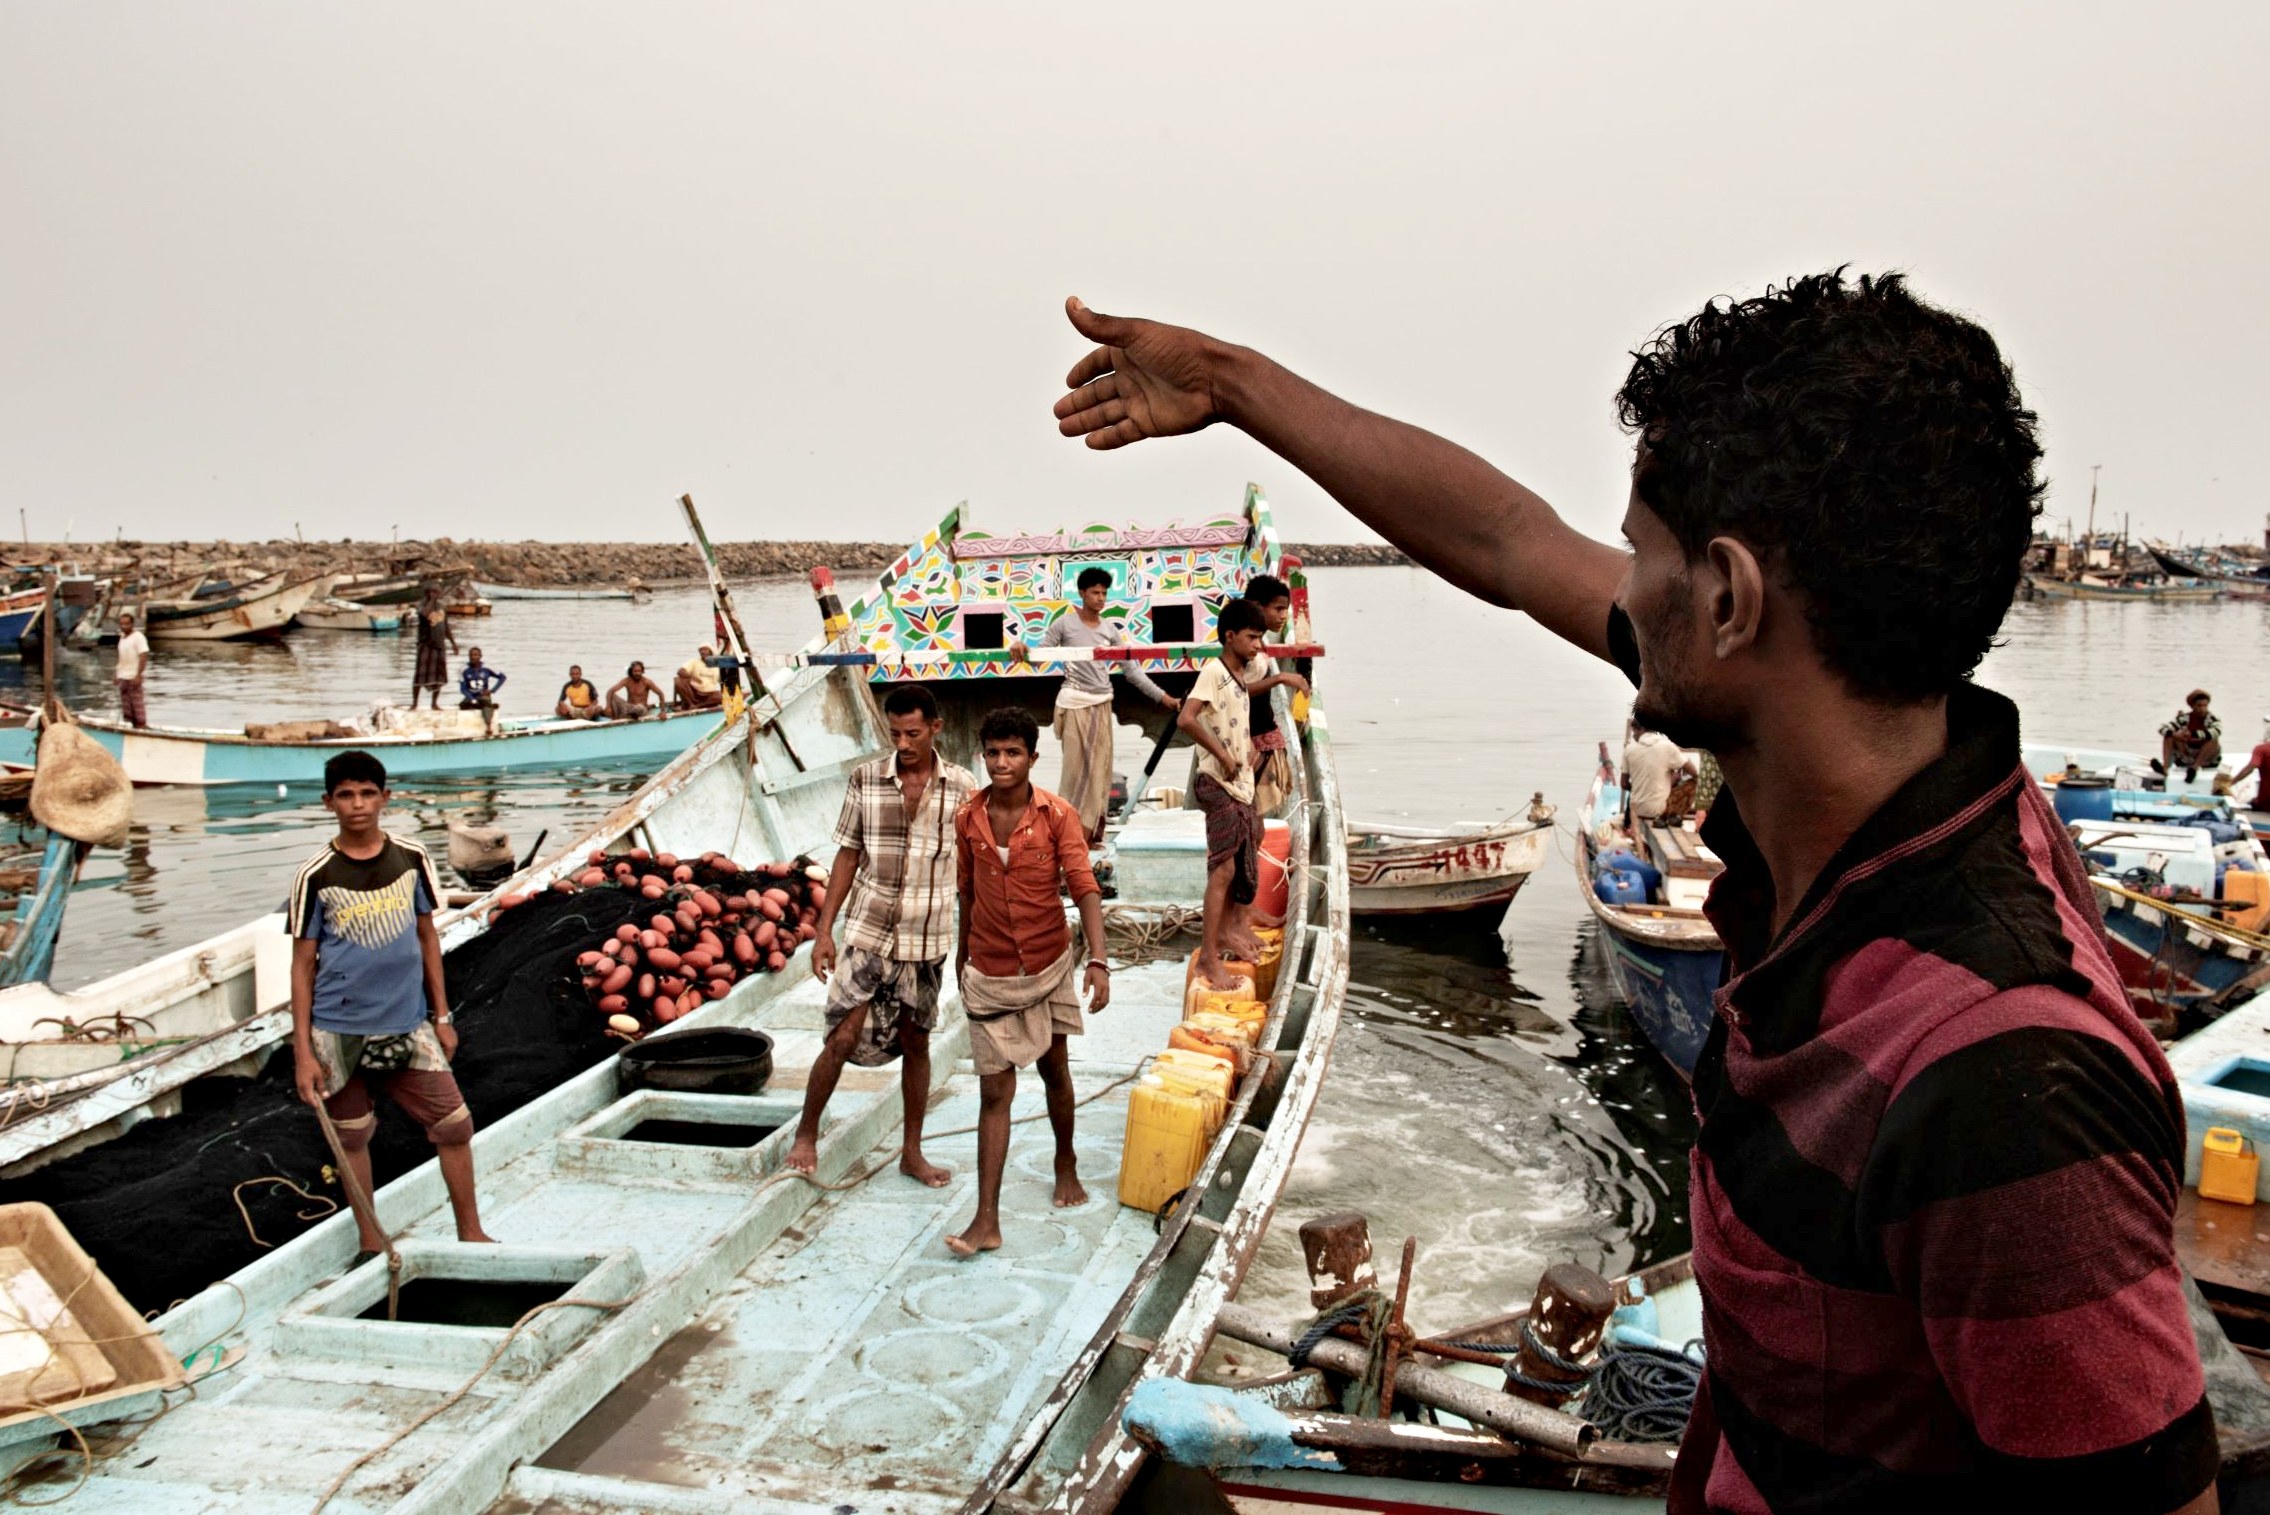 Fishermen on boats in Hodeidah, Yemen (Alessio Romenzi)